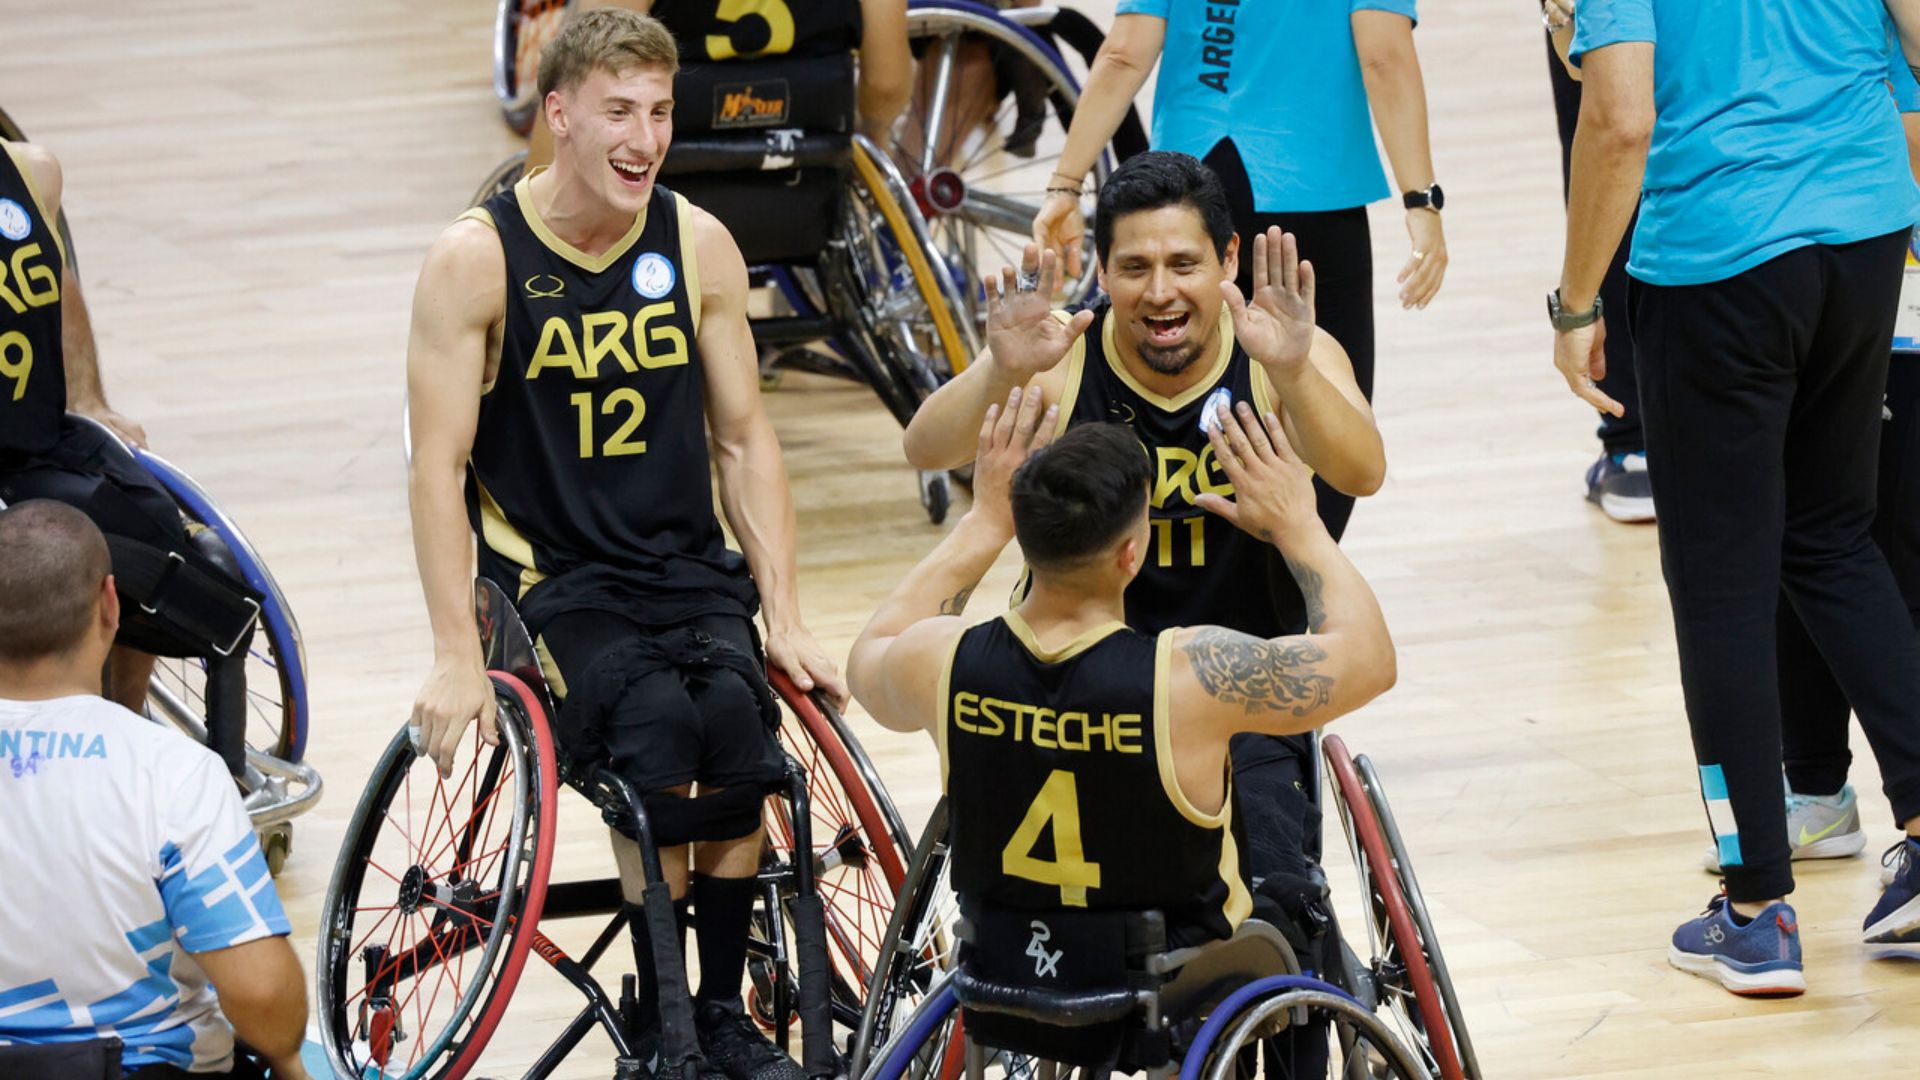 Básquetbol en silla de ruedas: Argentina gana a Brasil y pasa a semifinales